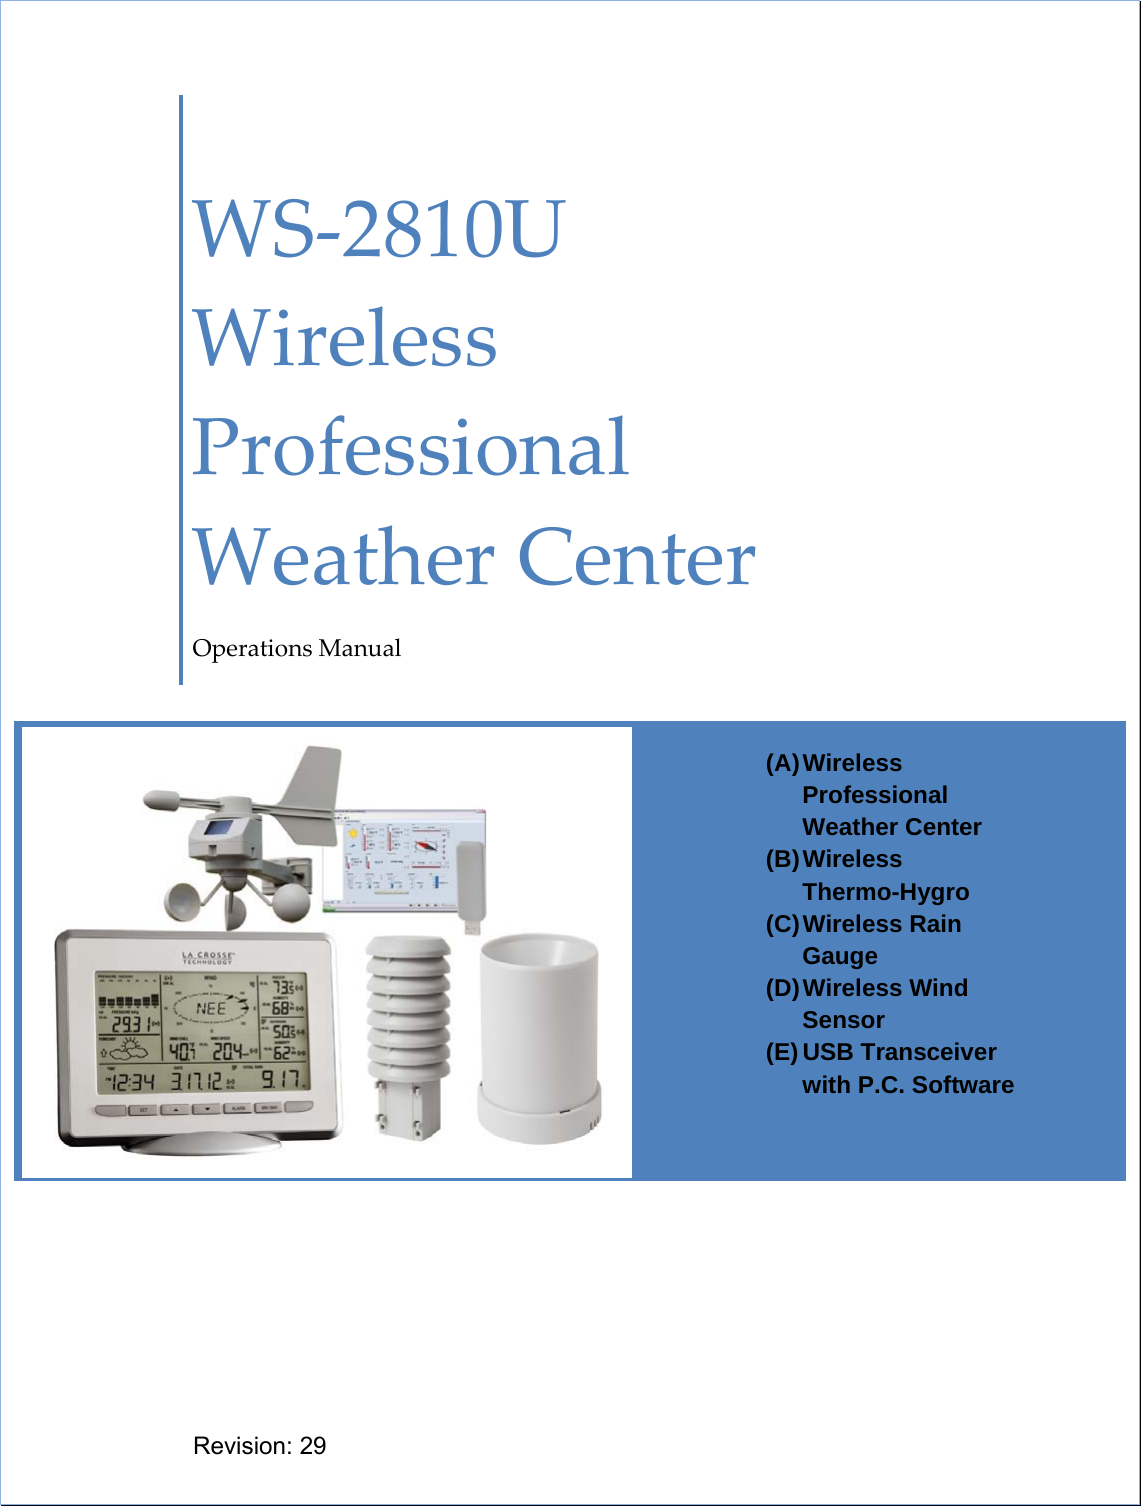      WS‐2810UWirelessProfessionalWeatherCenterOperationsManualRevision: 29 (A) Wireless Professional Weather Center (B) Wireless   Thermo-Hygro (C) Wireless  Rain Gauge (D) Wireless  Wind Sensor (E) USB Transceiver with P.C. Software 